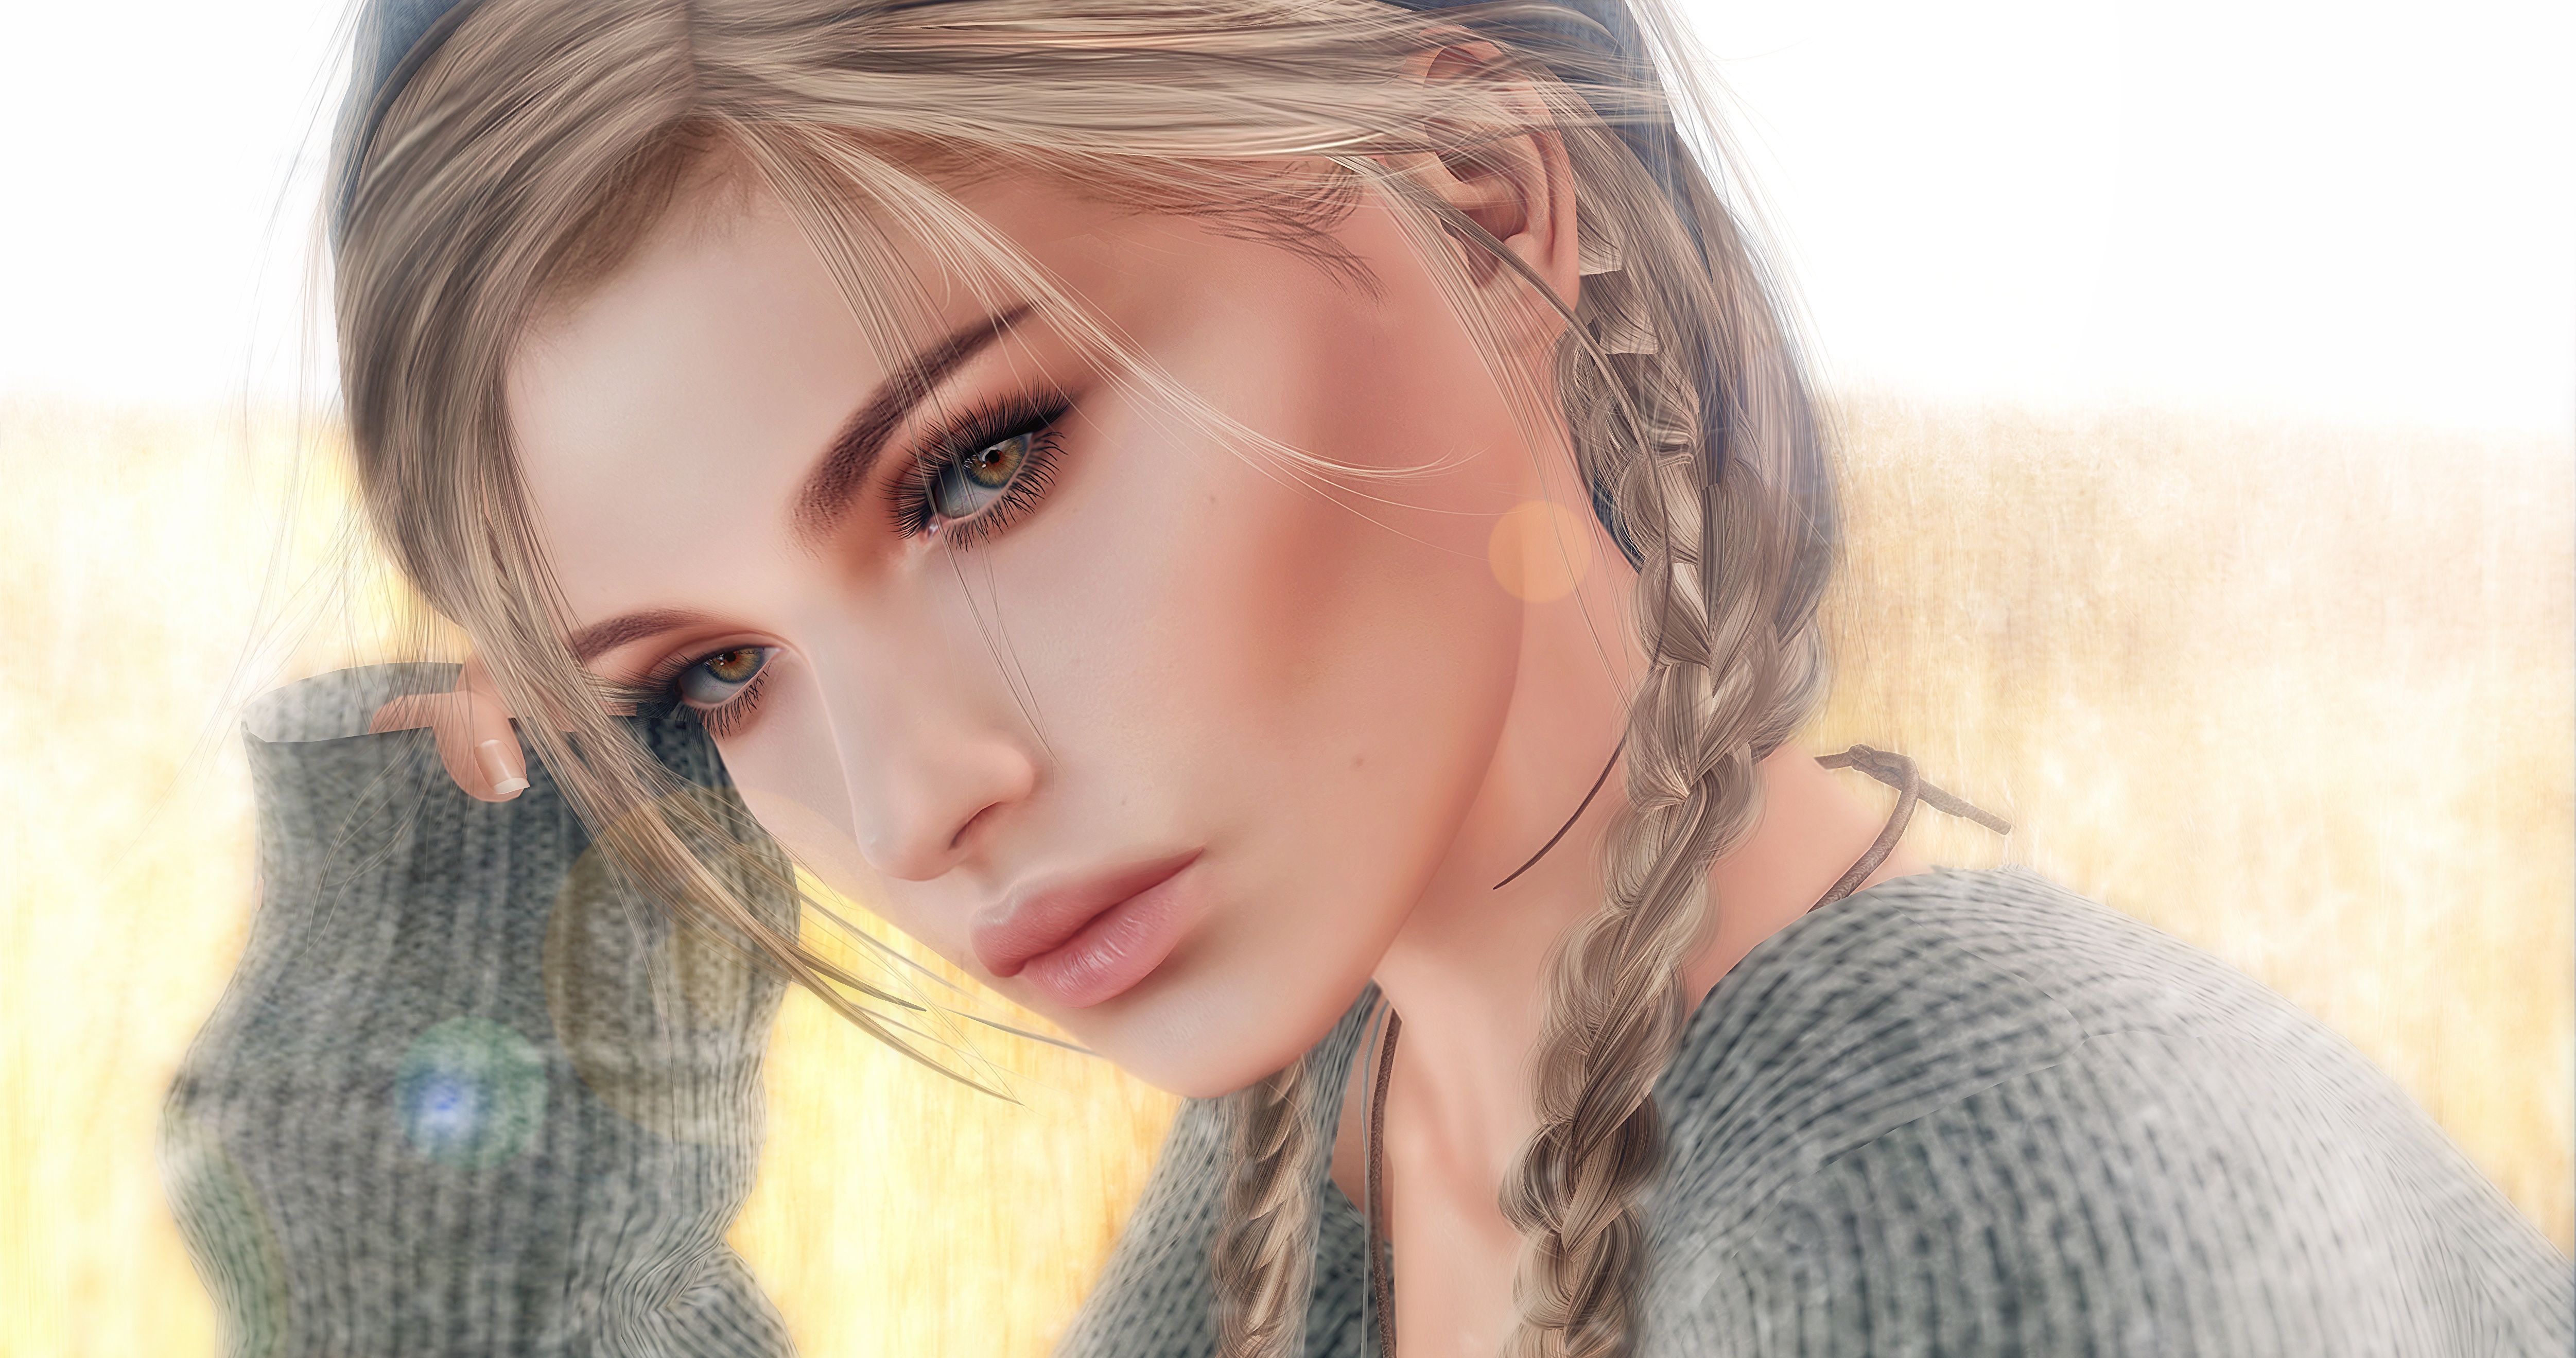 Dark Hair Blonde Girl Art, HD Artist, 4k Wallpaper, Image, Background, Photo and Picture